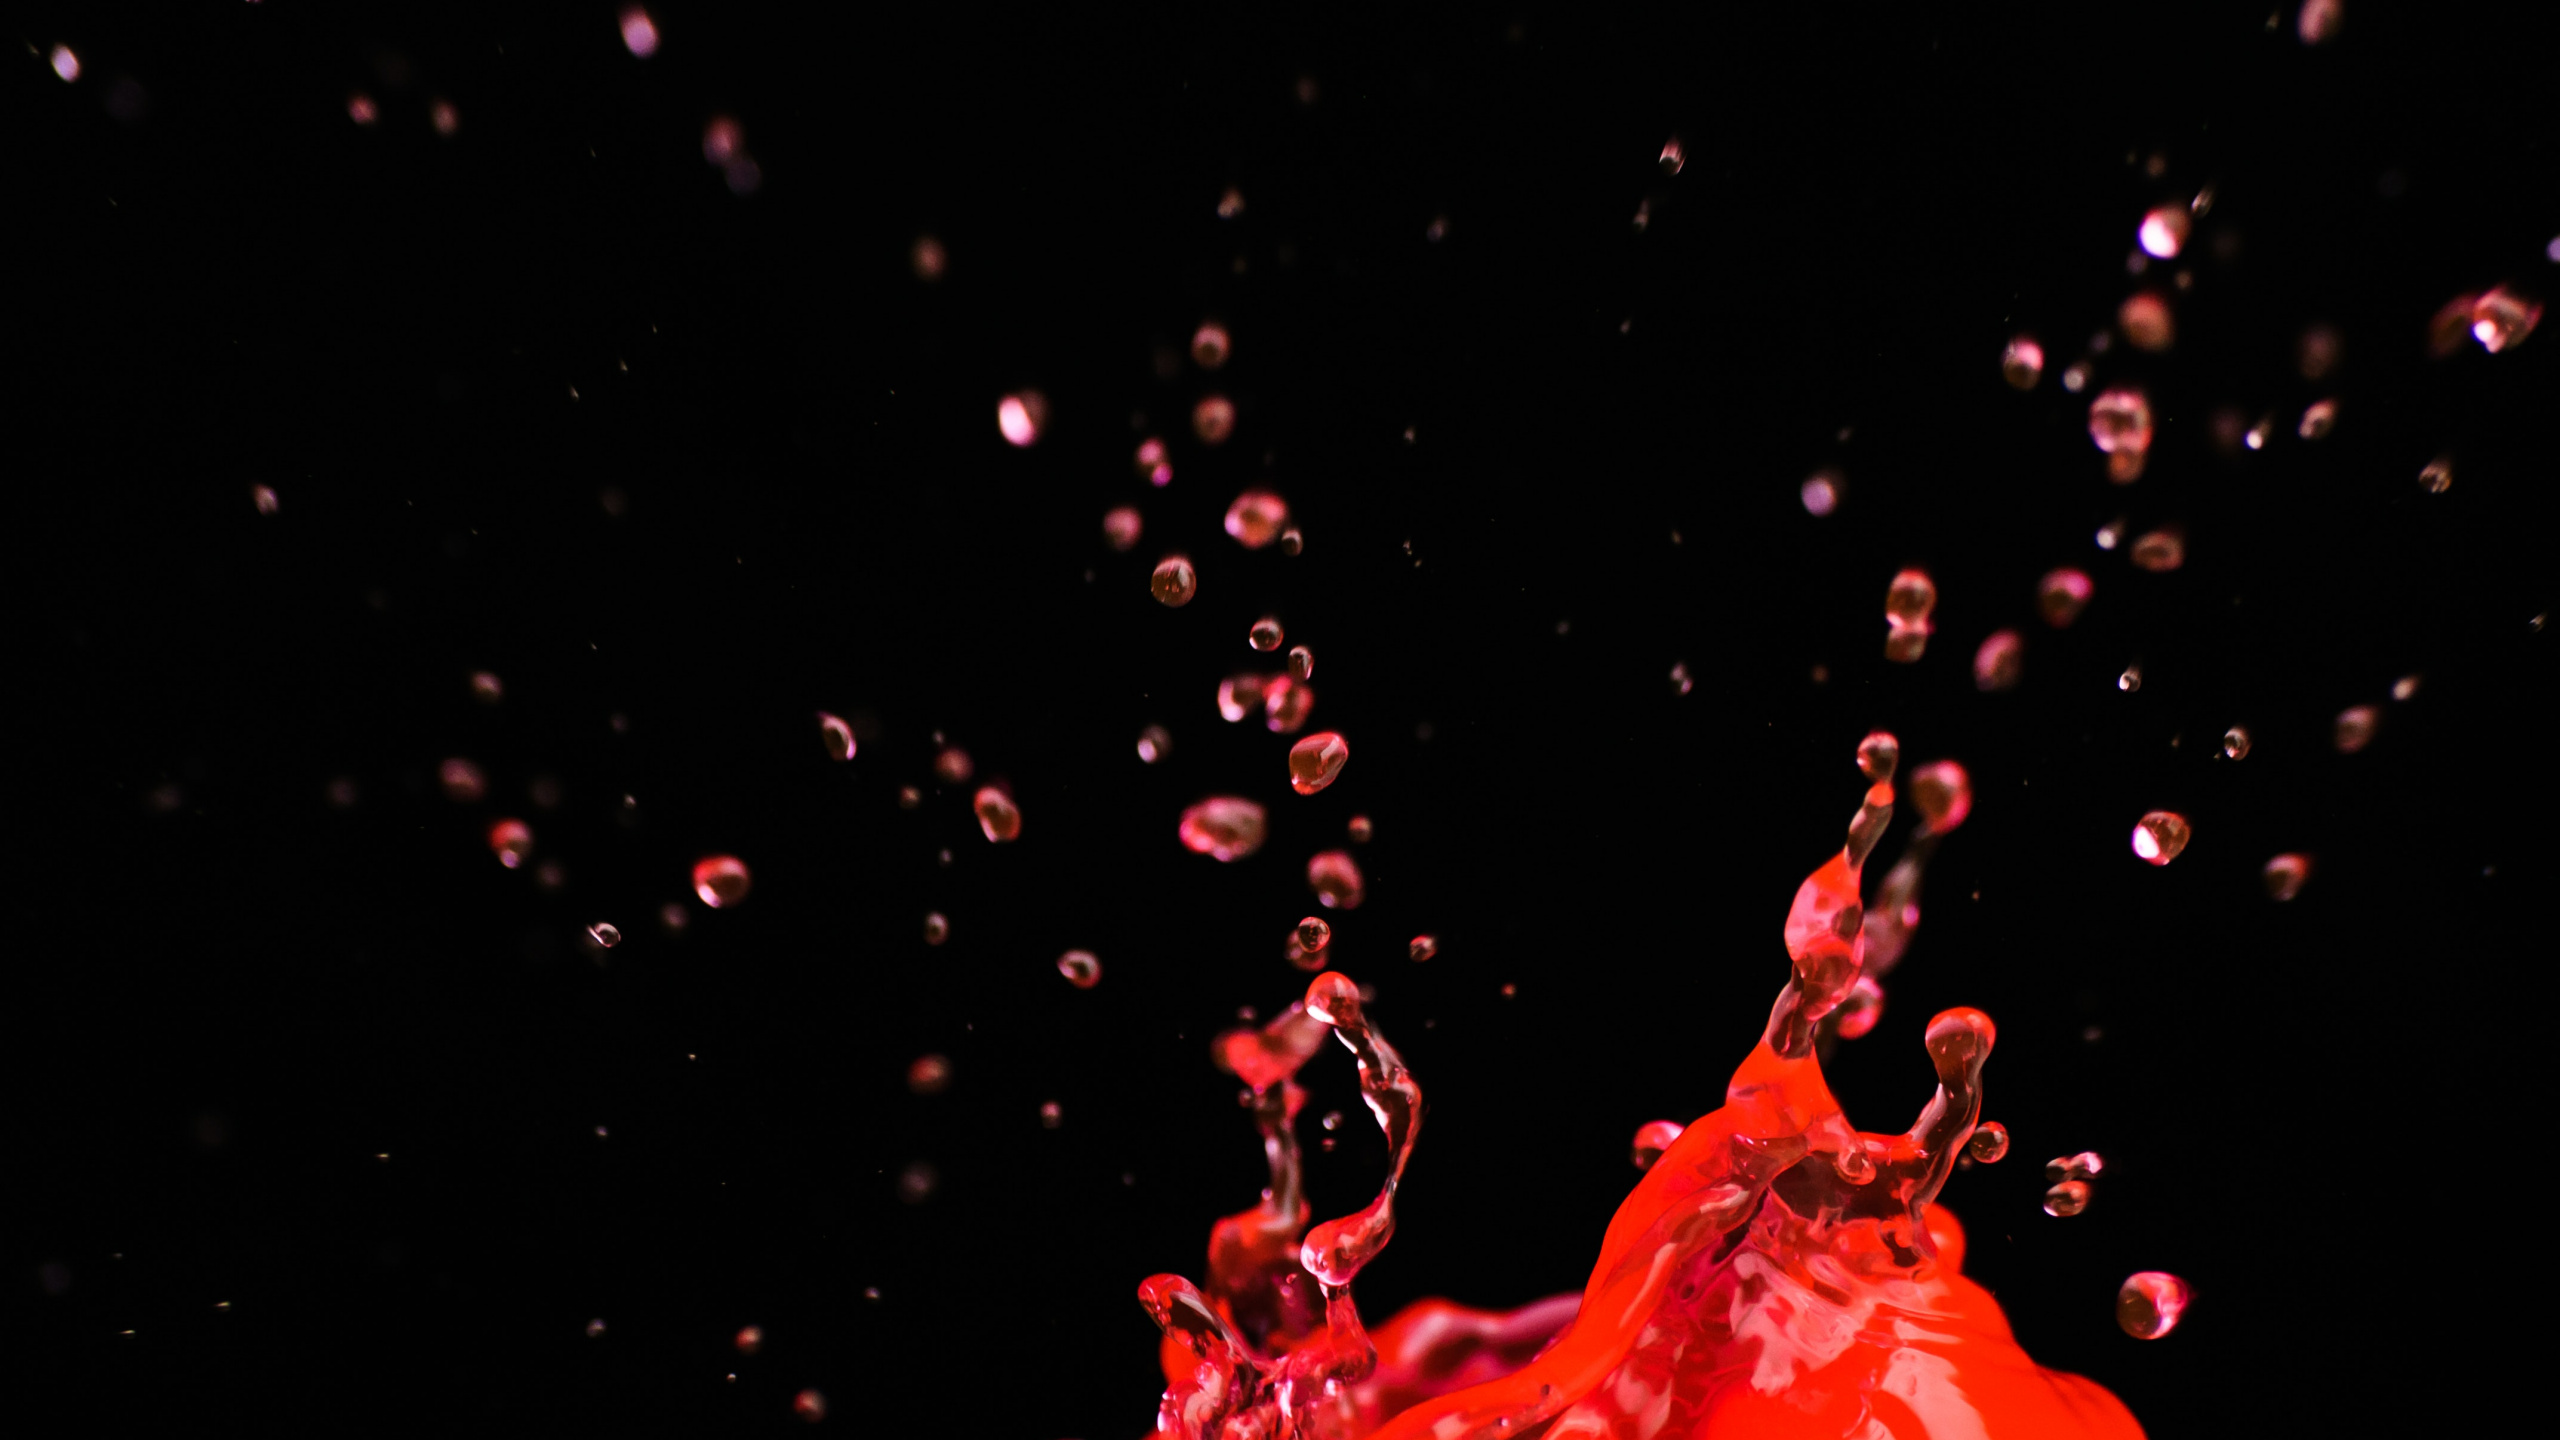 Liquid, Water, Red, Drop, Space. Wallpaper in 2560x1440 Resolution